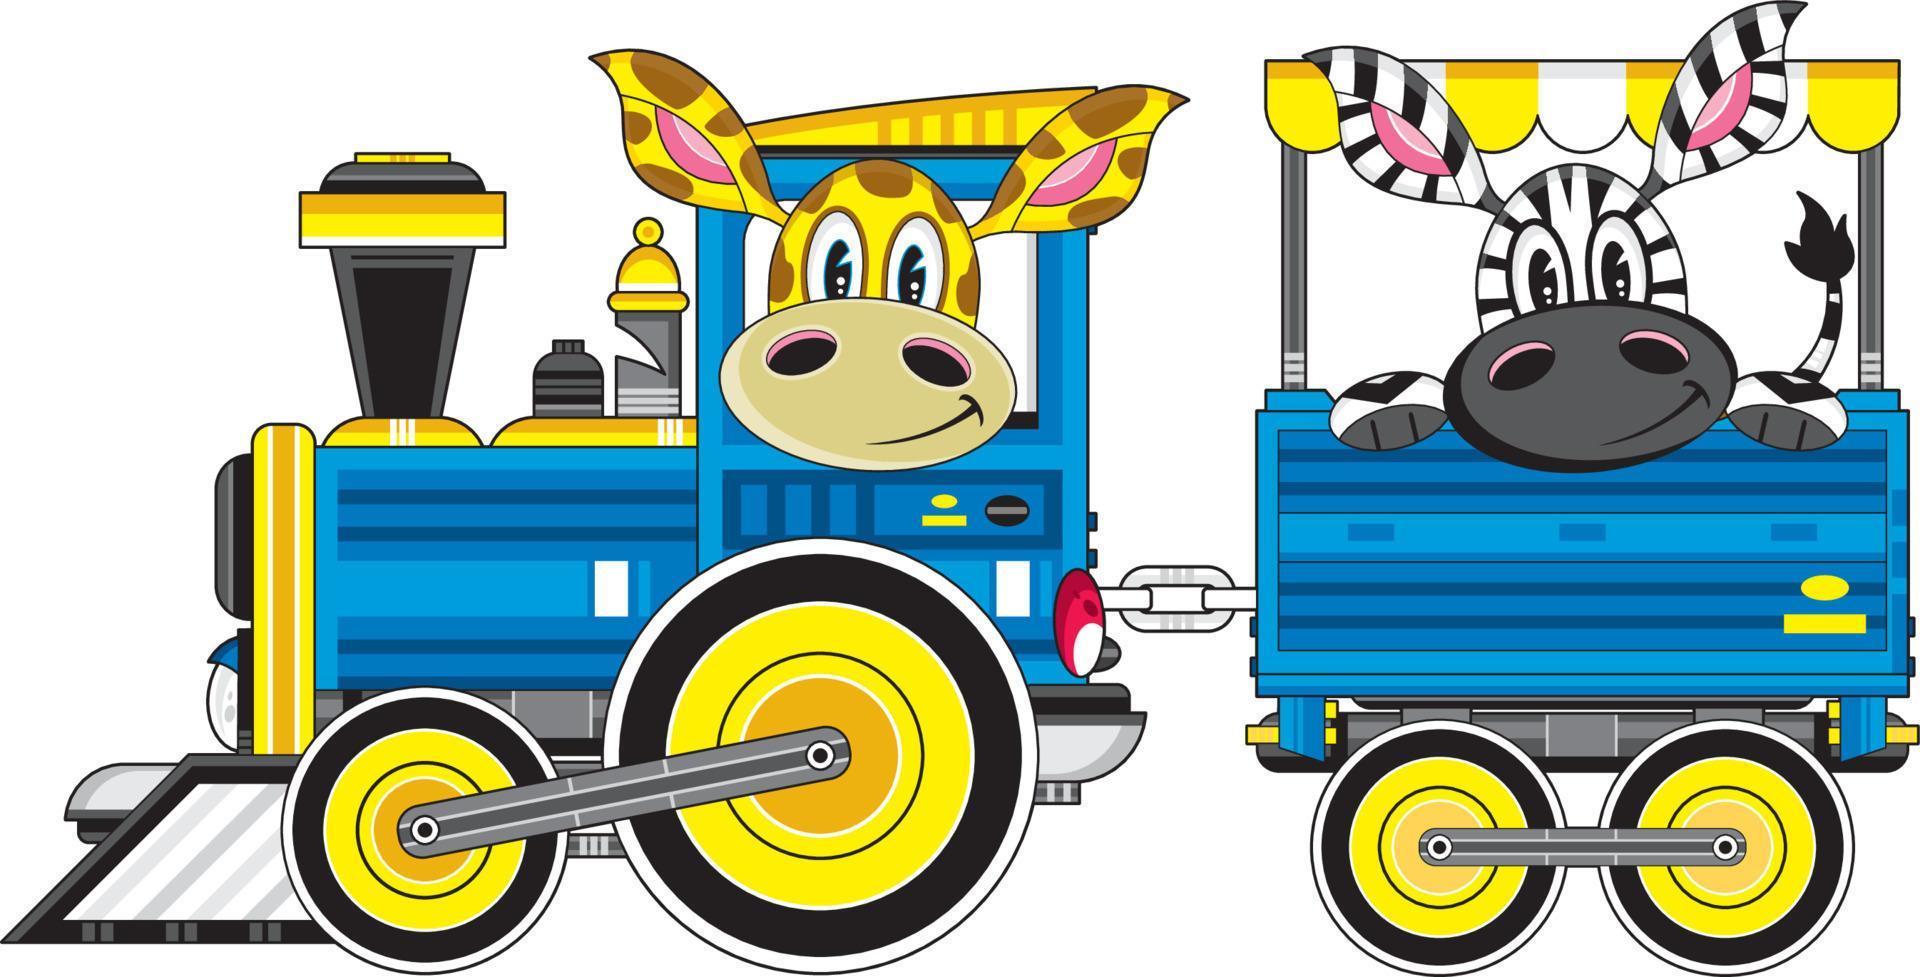 süß Karikatur Giraffe Fahren Zug mit Zebra Passagier vektor